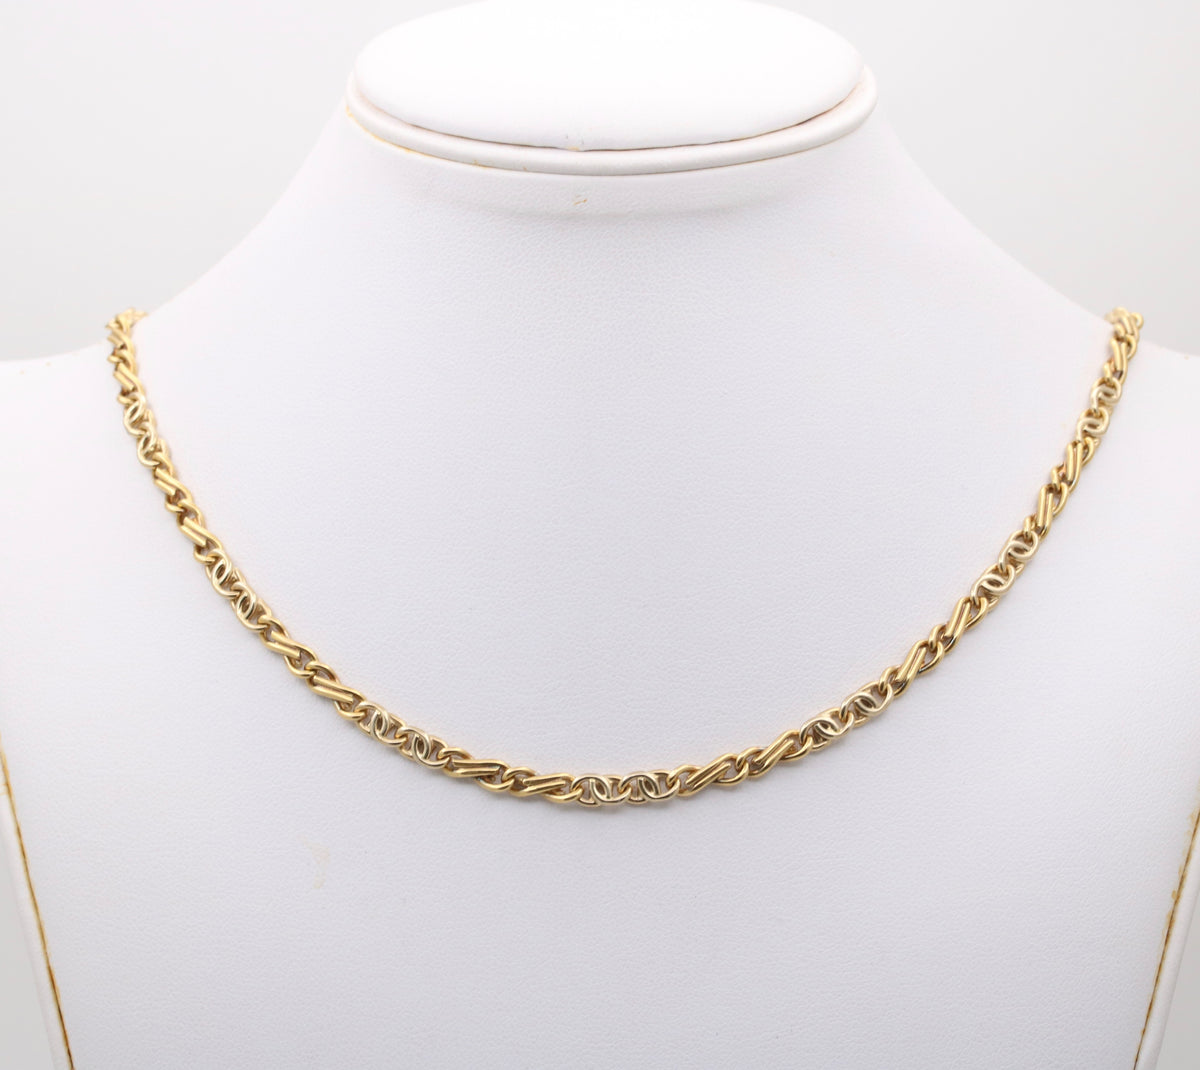 Vintage 18K Biciolor Gold Infinity Link Chain, 20” Long